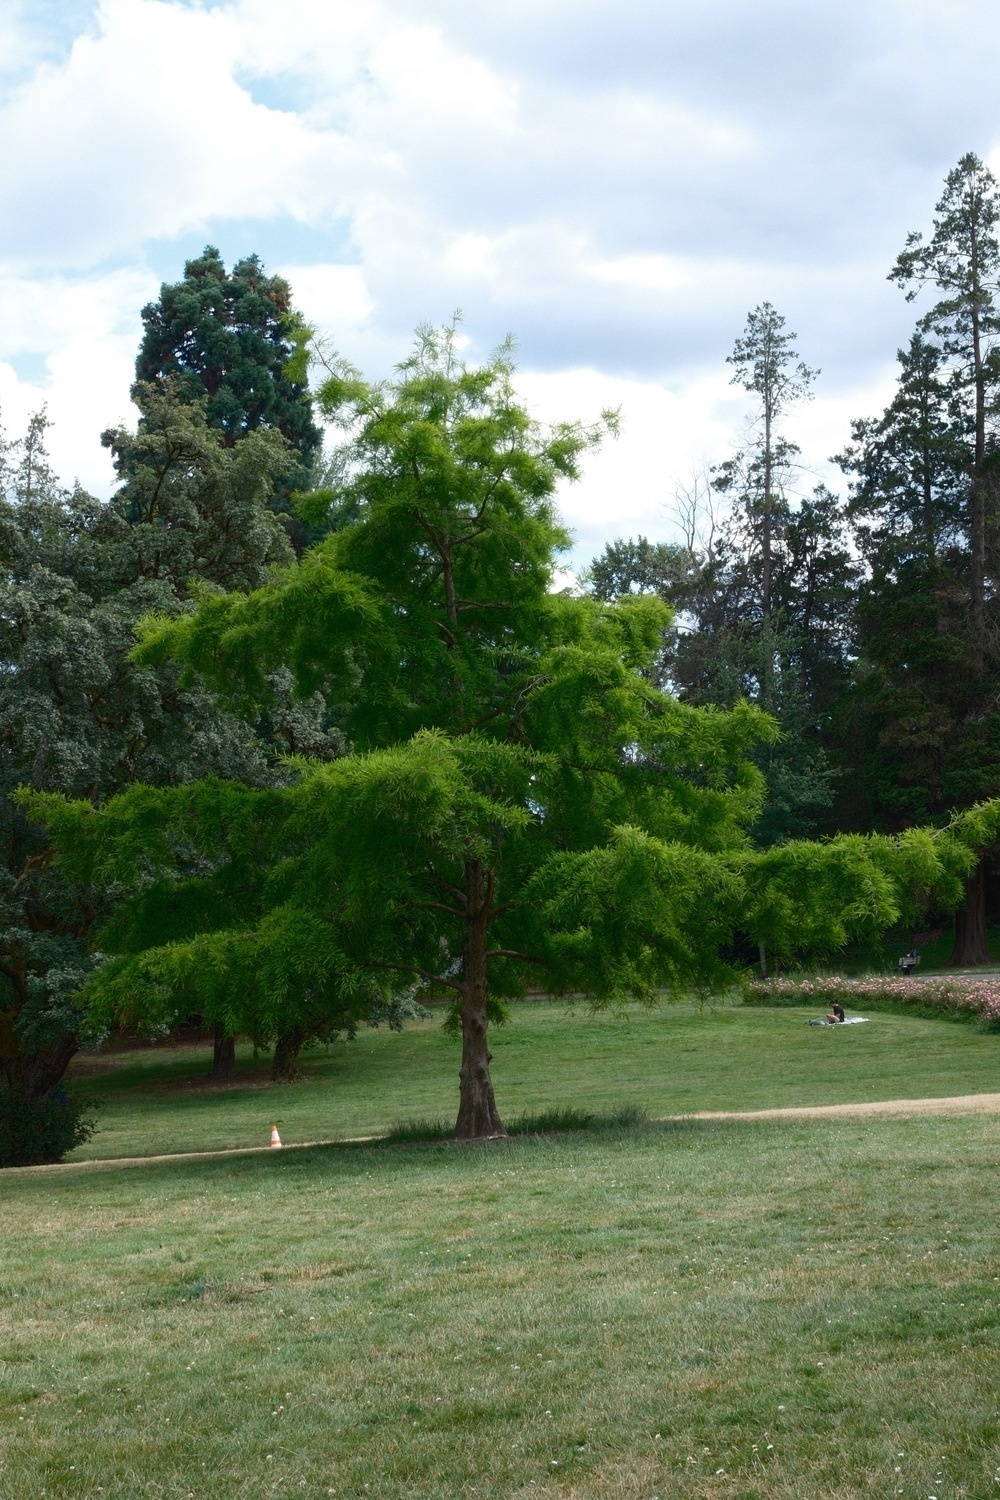 A vivid green tree in a grassy park field